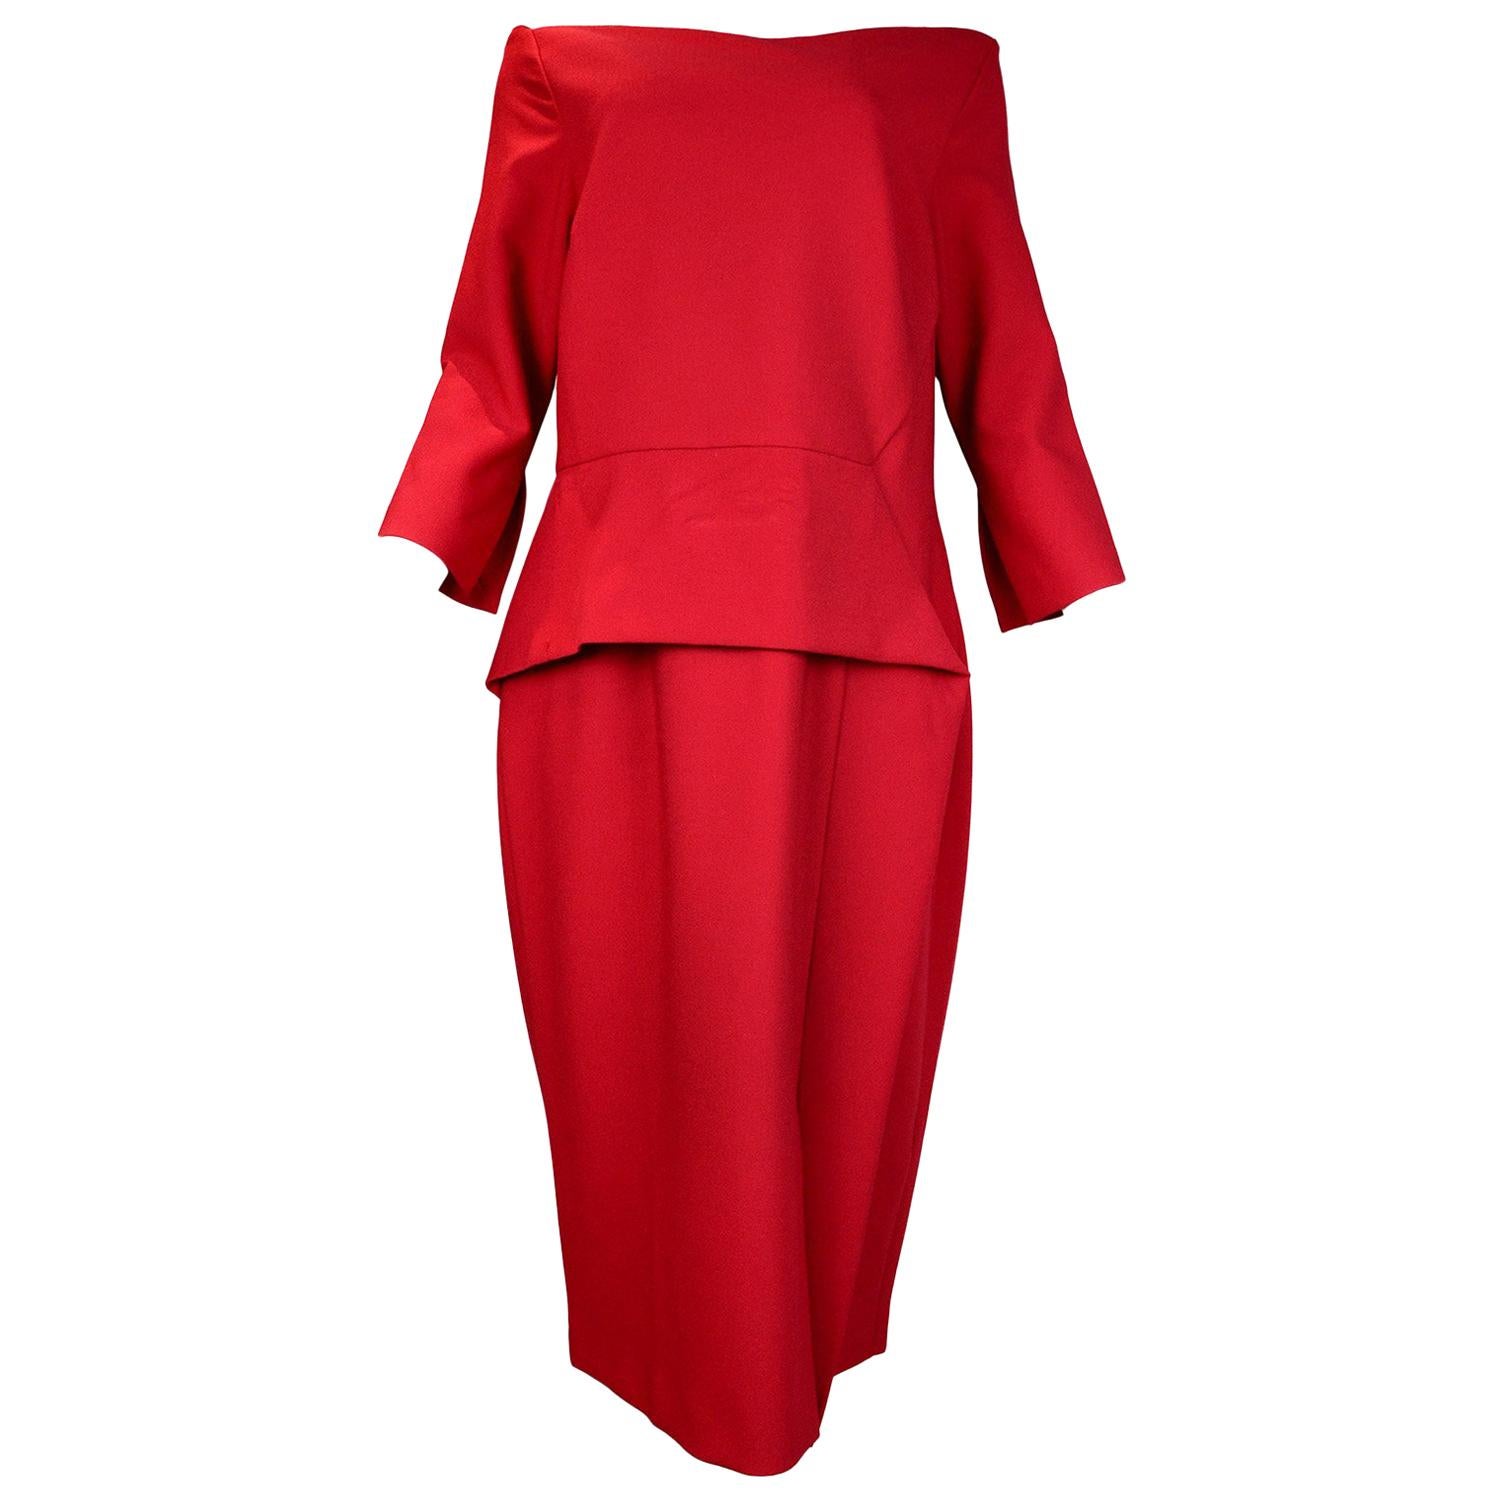 Roland Mouret NWT Red Ardingly Off-The-Shoulder Peplum Dress Sz 16 RT. $1, 500